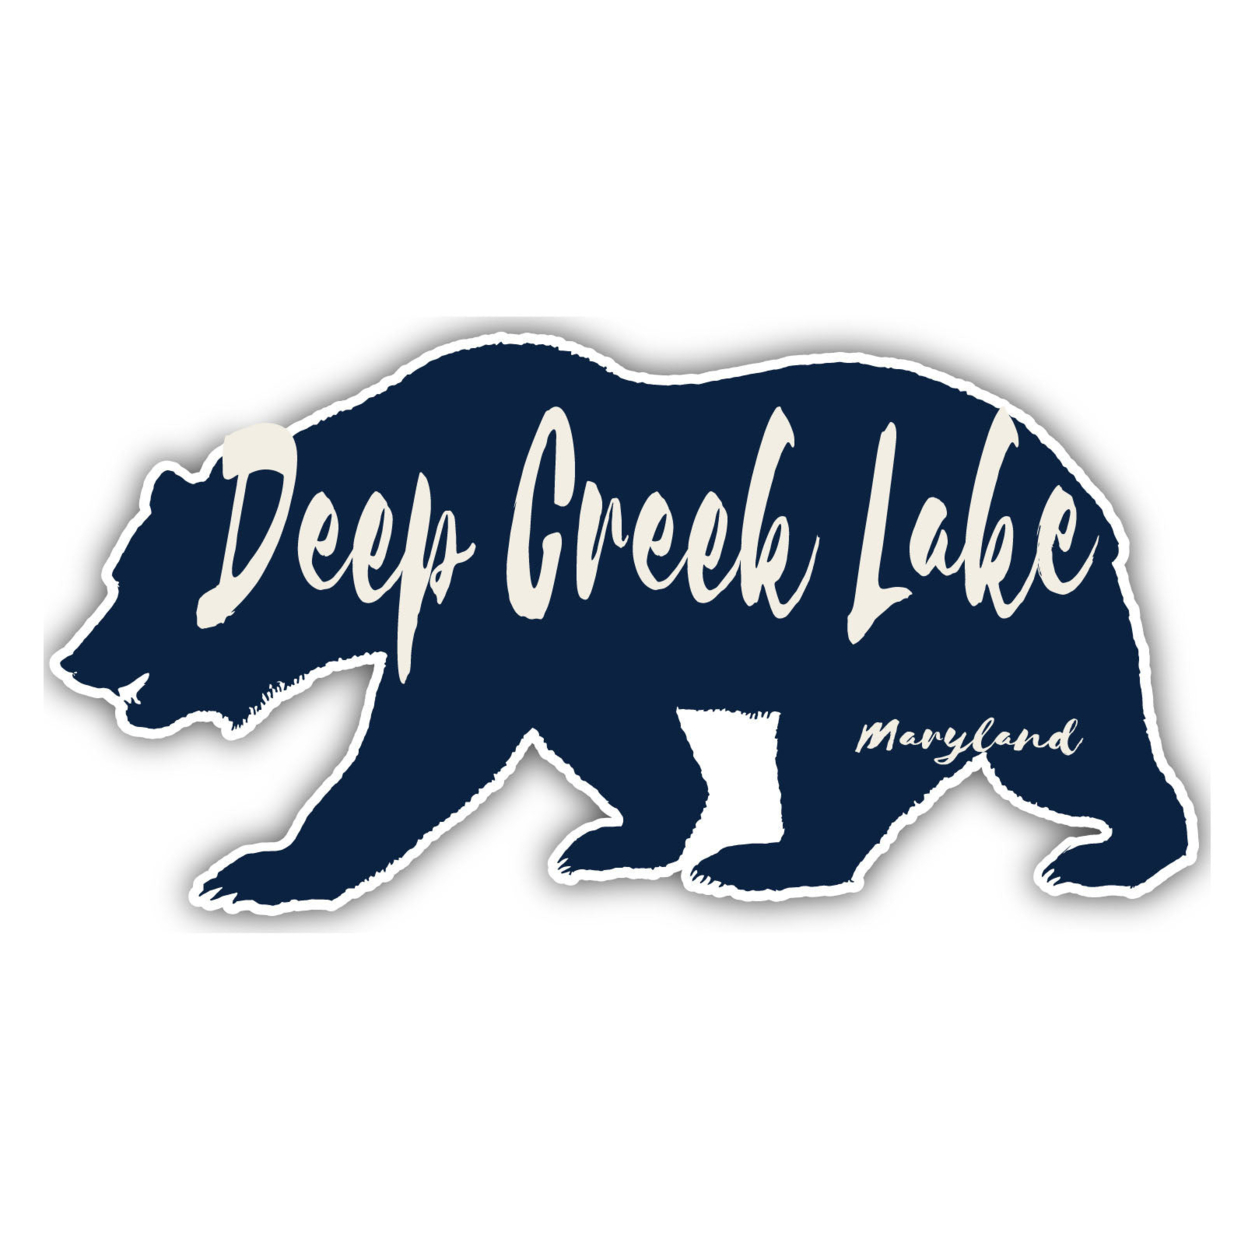 Deep Creek Lake Maryland Souvenir Decorative Stickers (Choose Theme And Size) - Single Unit, 4-Inch, Bear